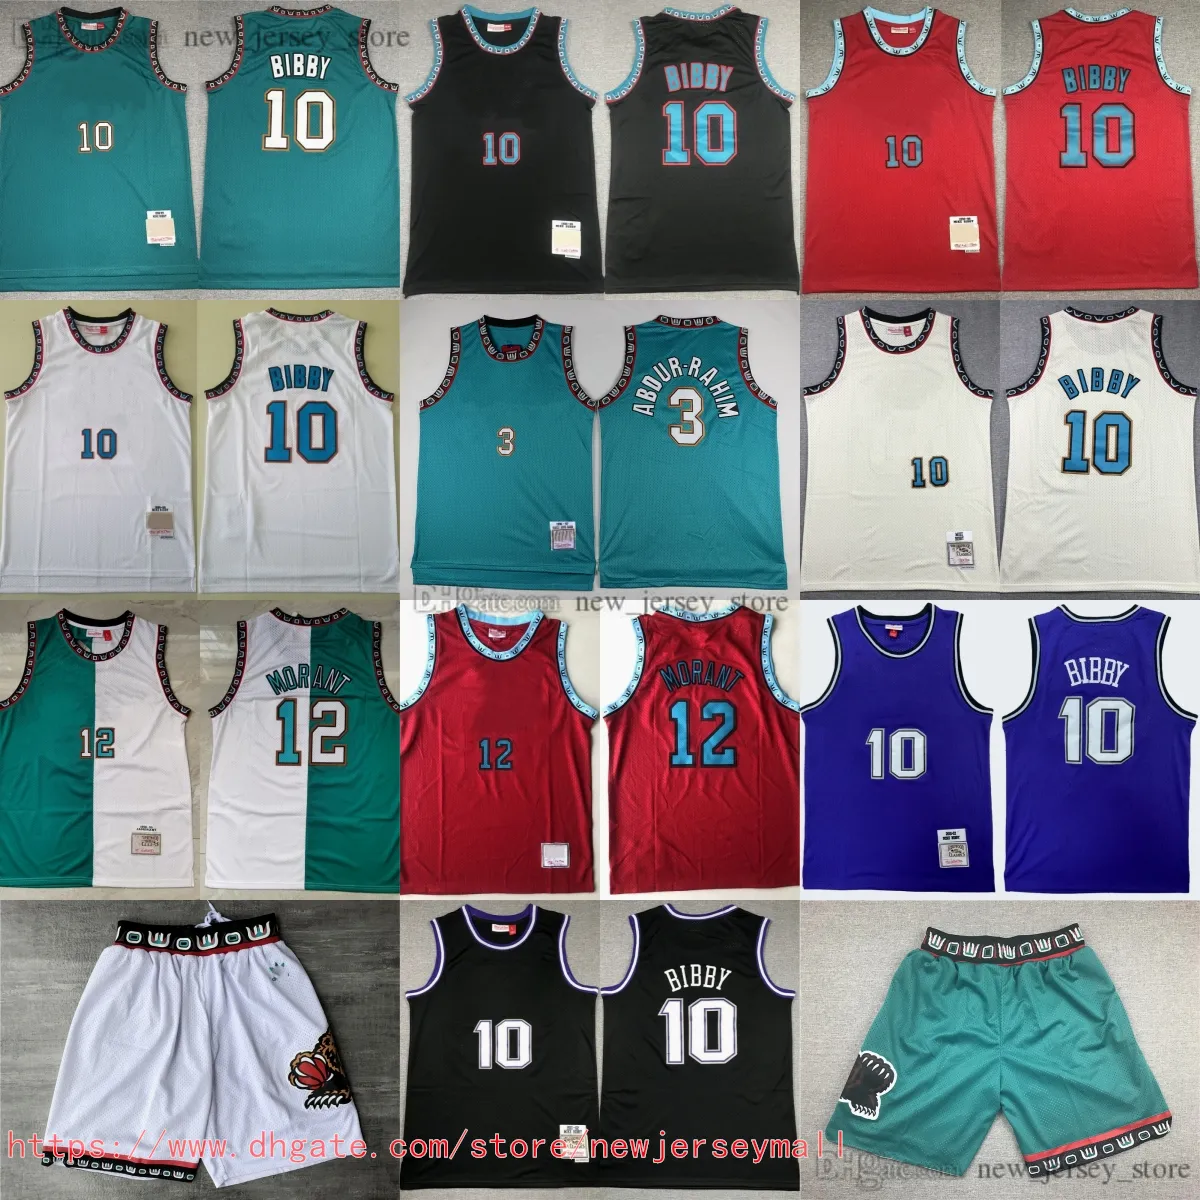 Classic Retro 1996-97 Basketball 3 Shareef Abdur-Rahim Jersey Shortback Classic 1998-99 Vintage 10 Mike Bibby Jersey Short 12 Ja Morant Oddychane koszulki sportowe